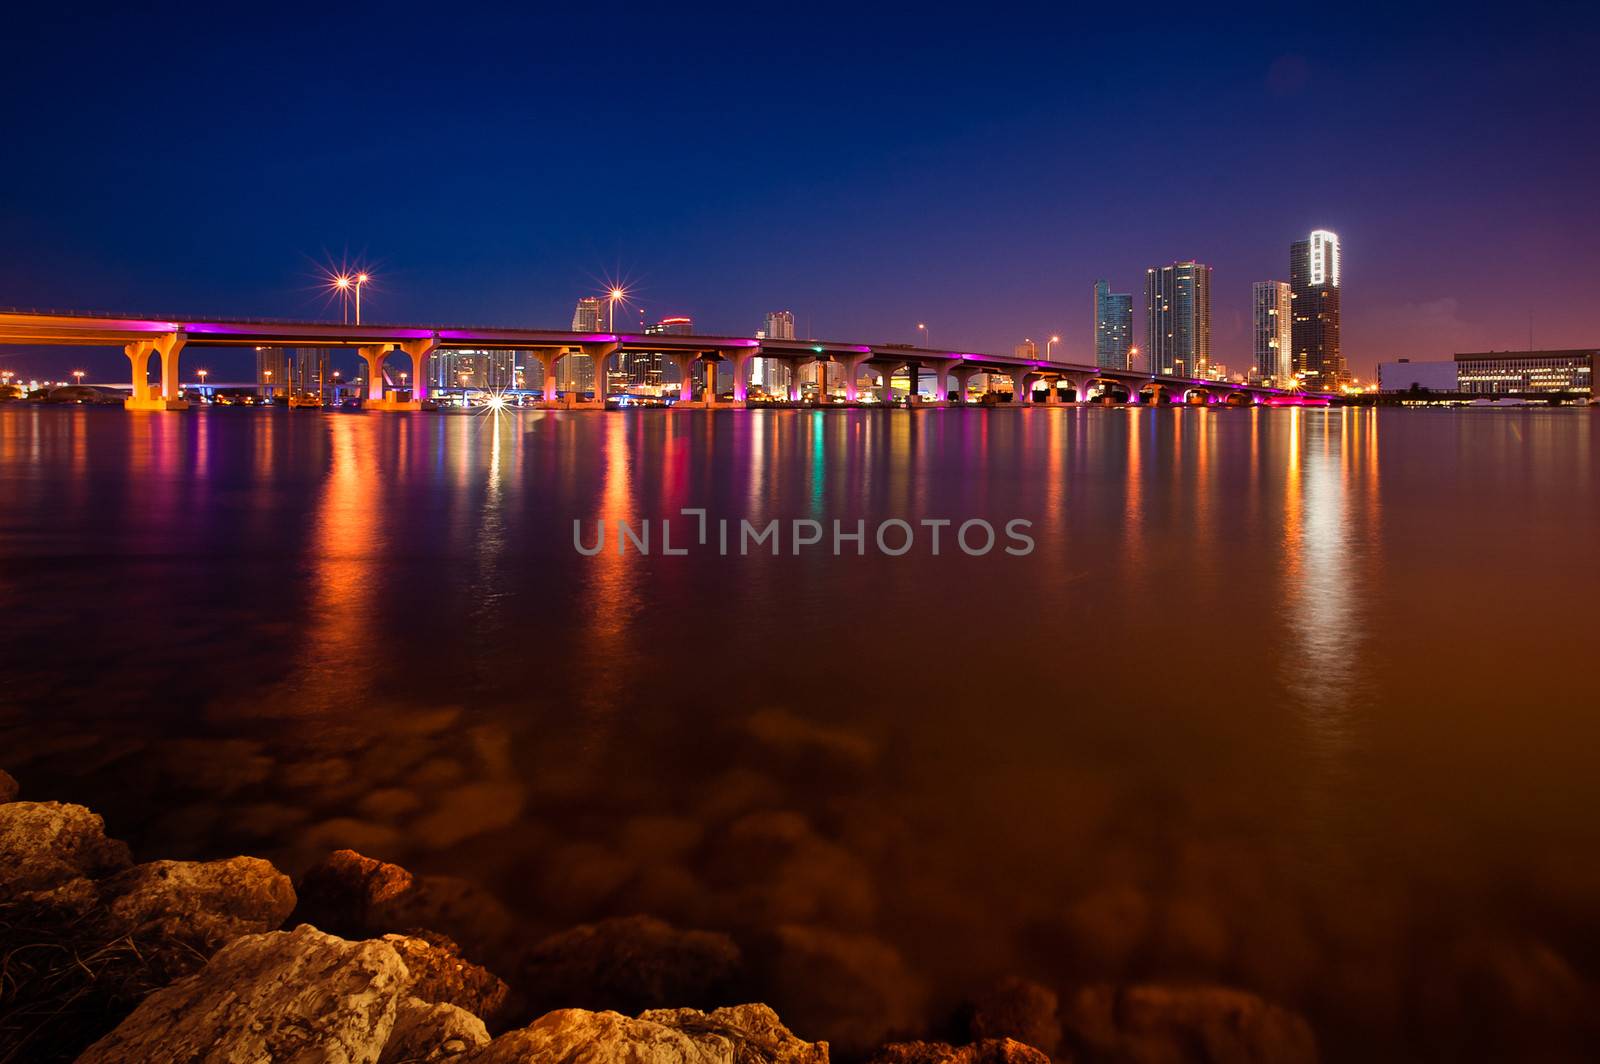 Bridge at Night in Miami by CelsoDiniz